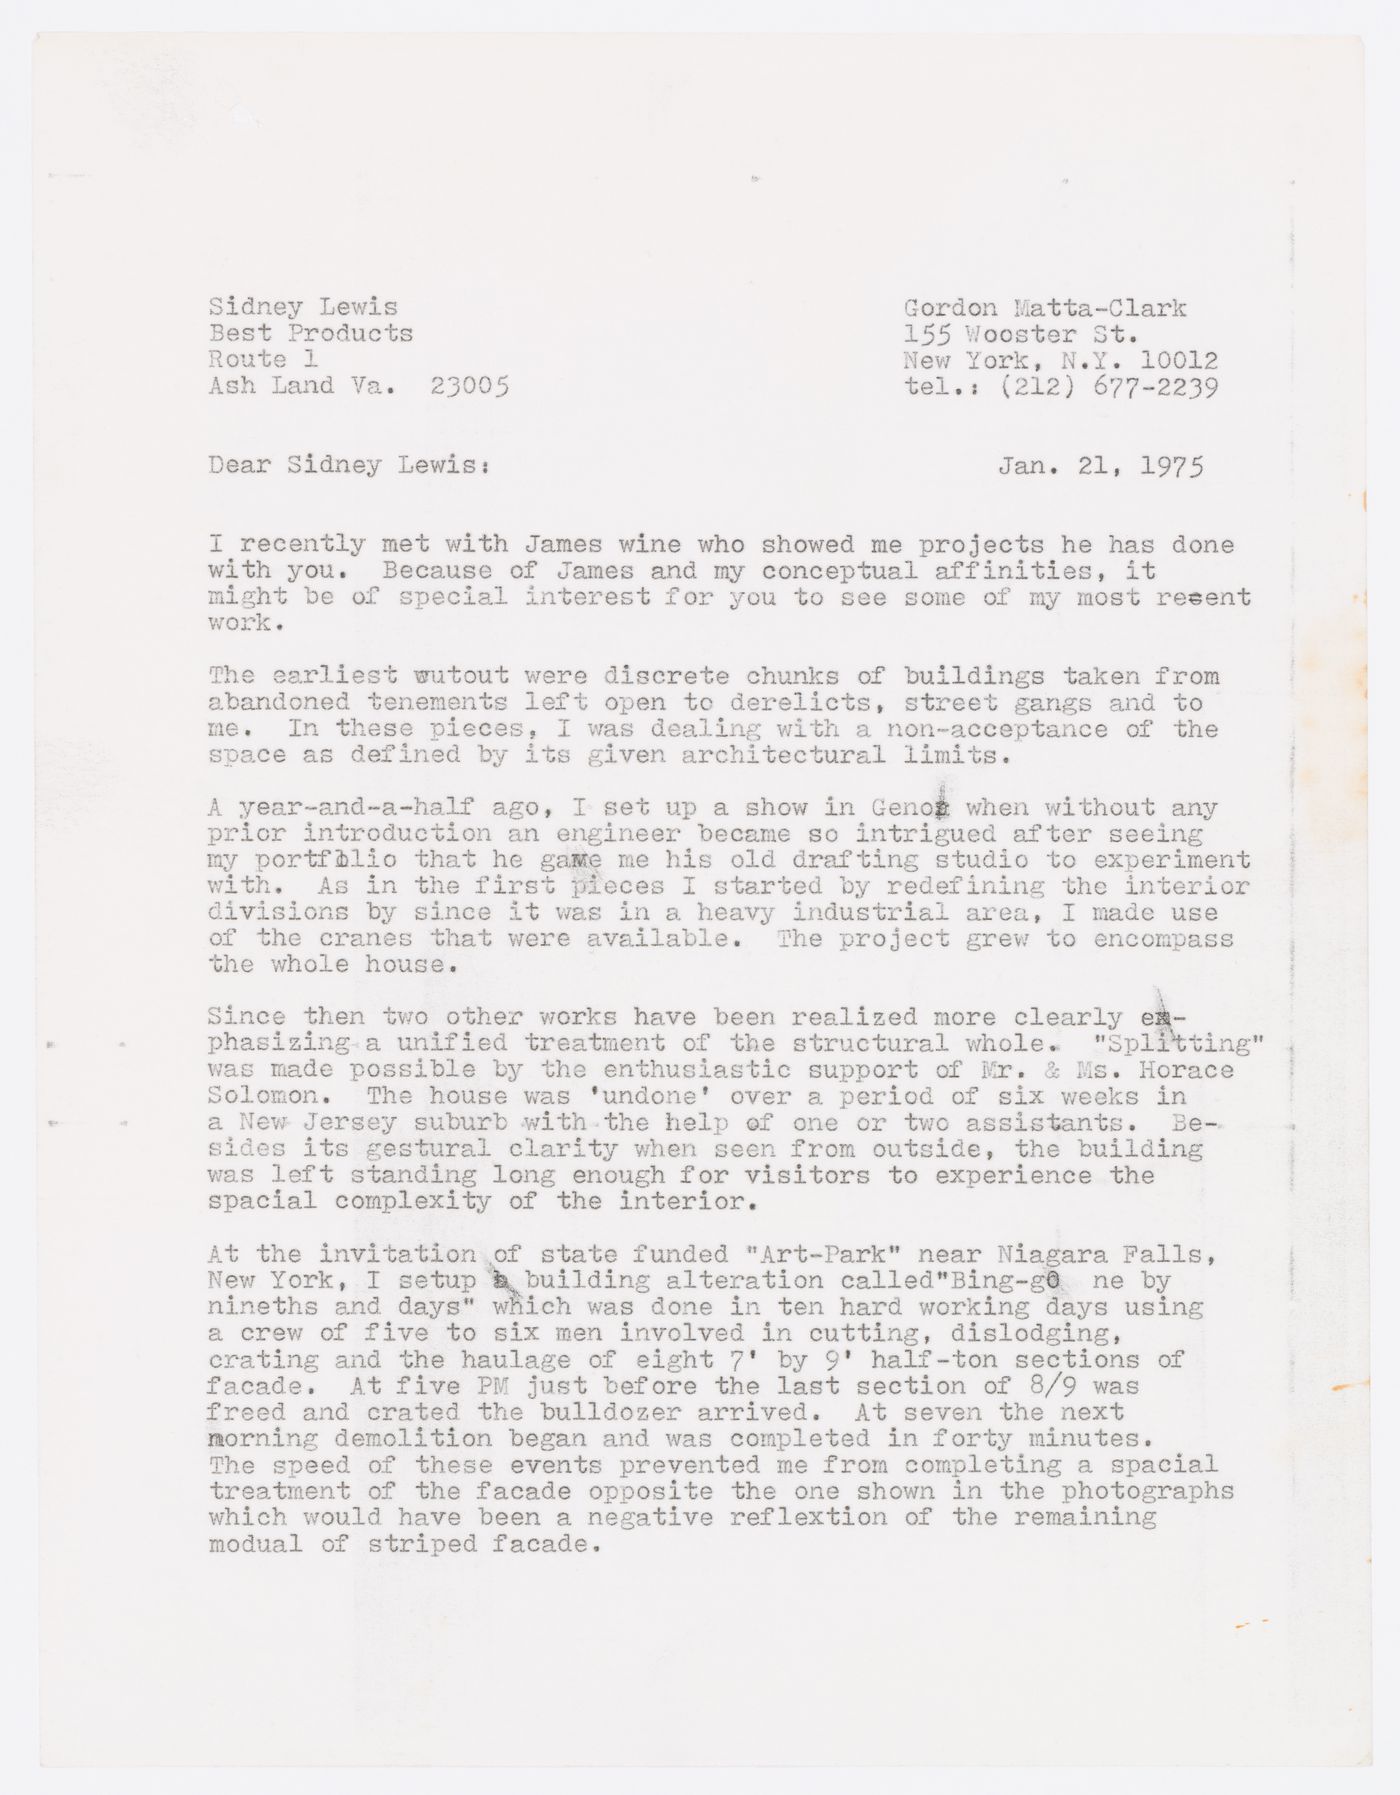 Letter from Gordon Matta-Clark to Sidney Lewis